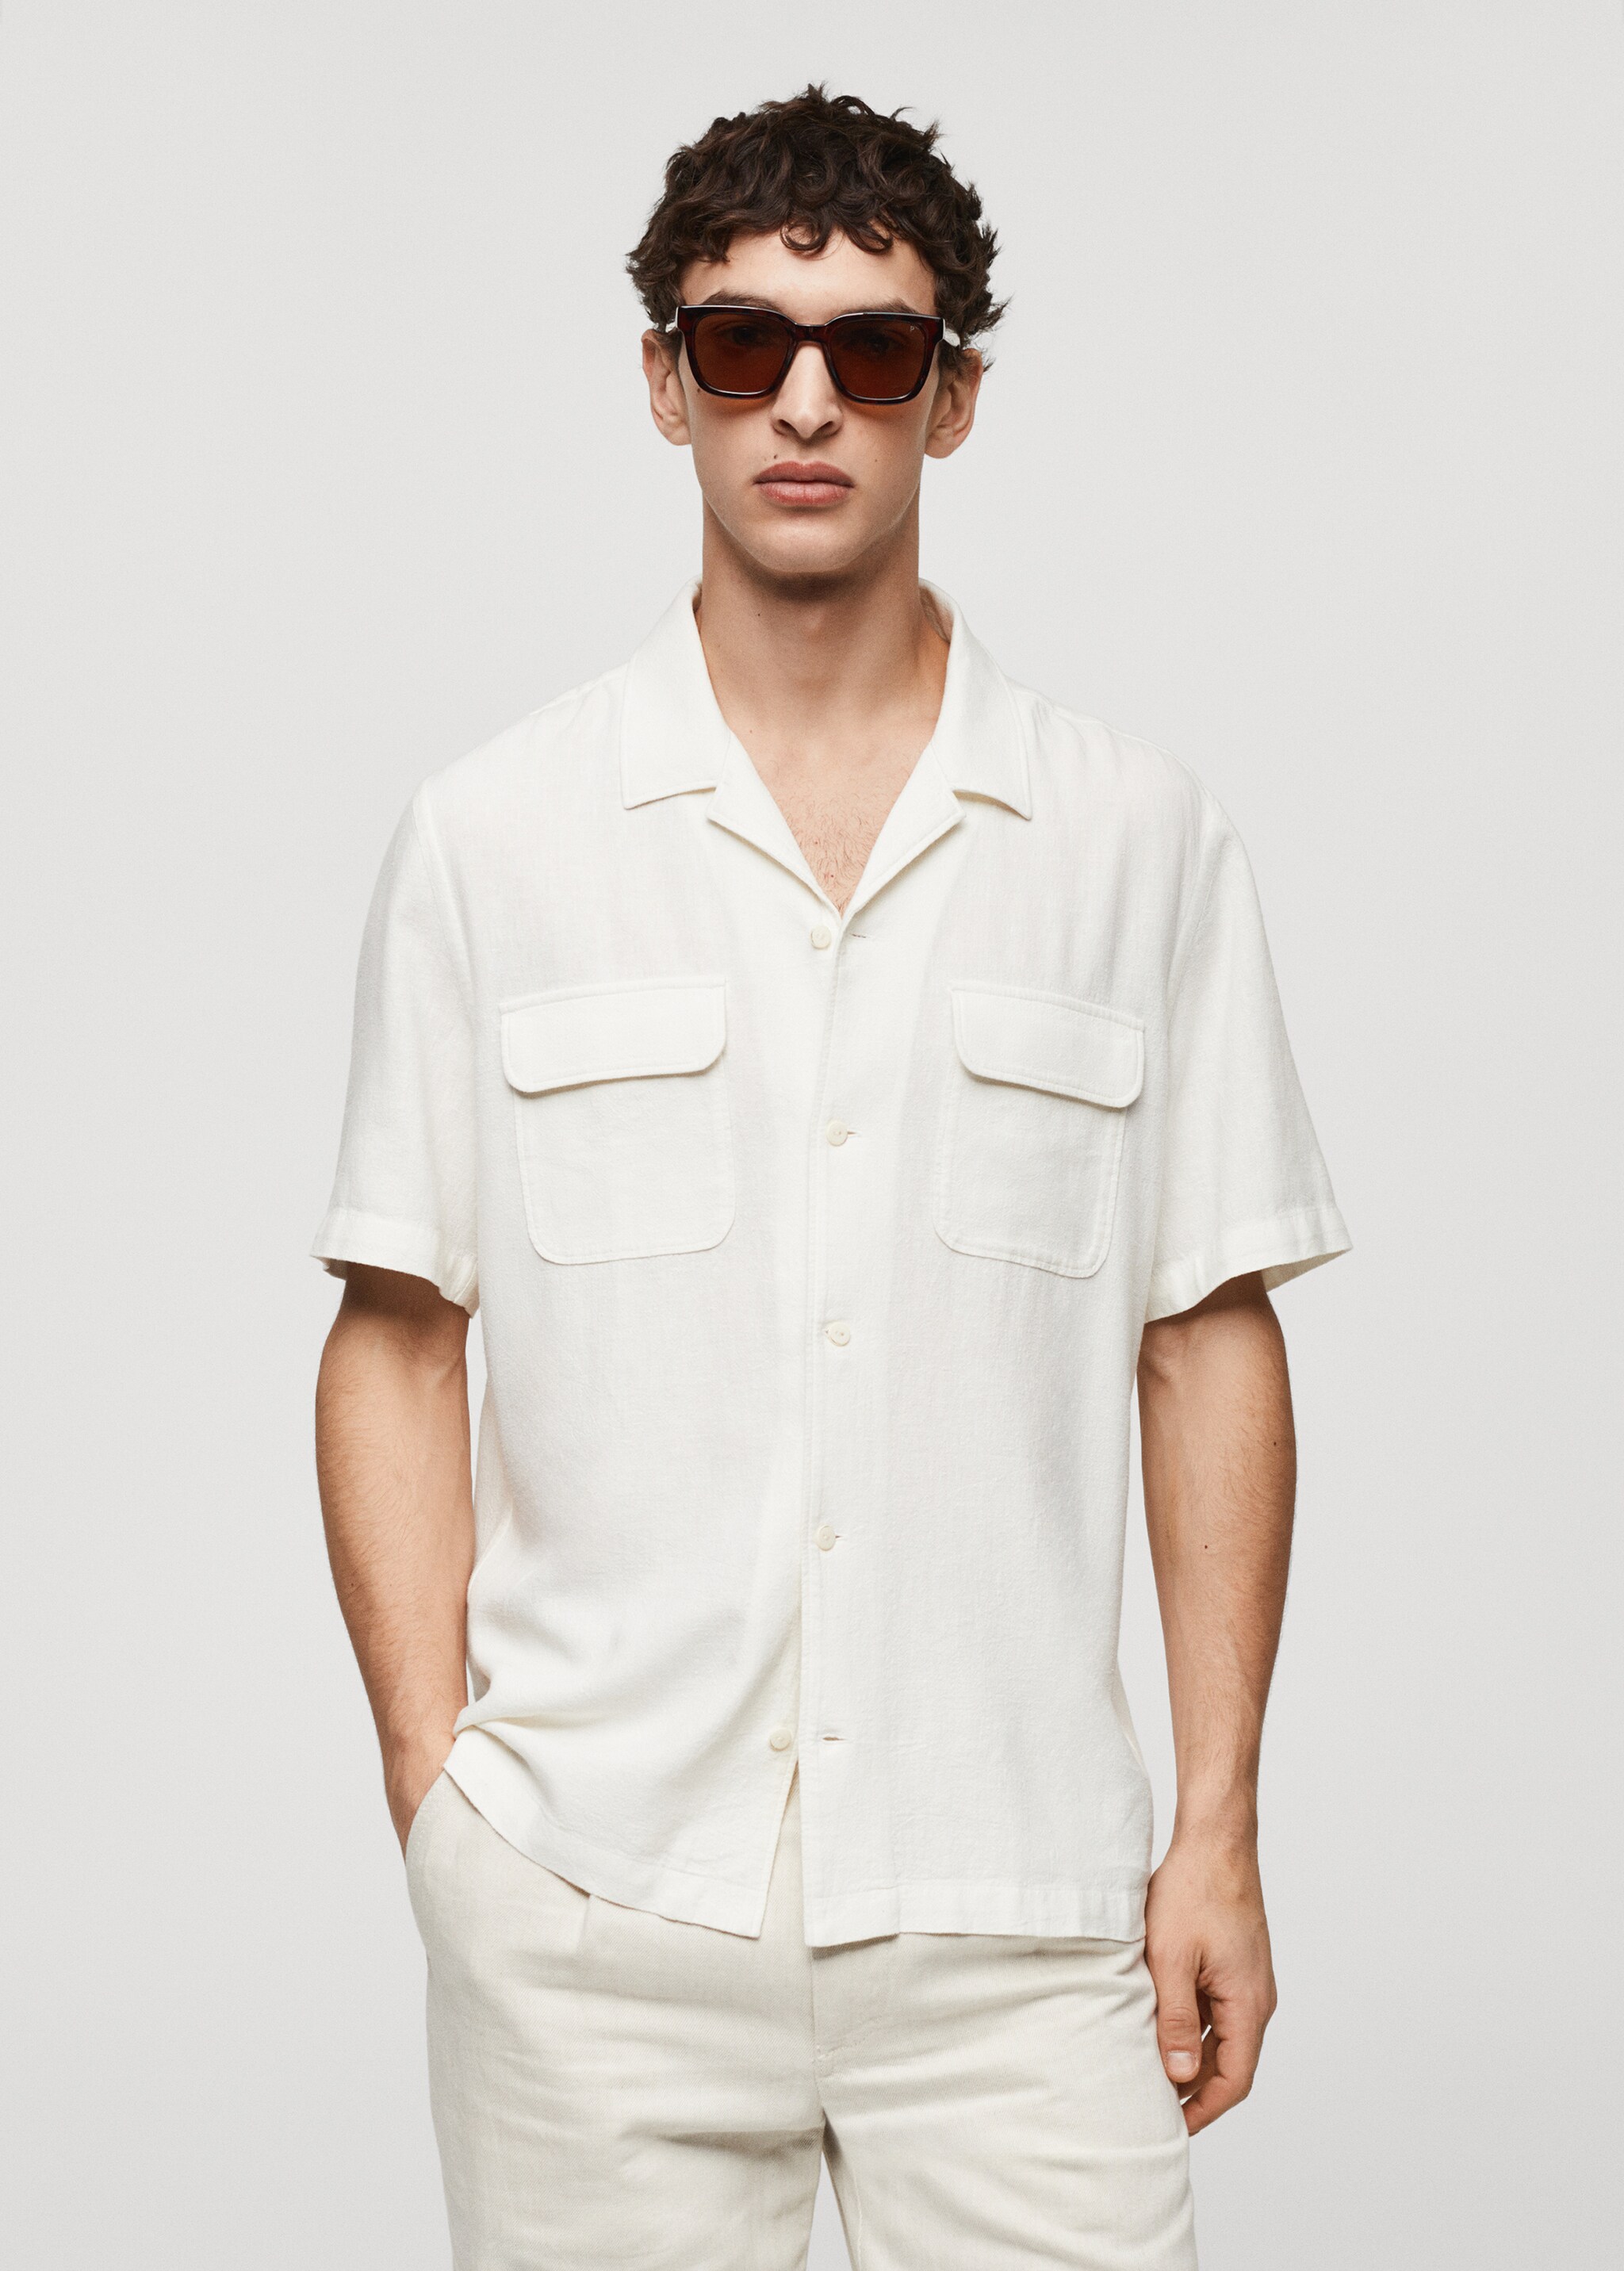 Linen shirt with bowling collar and pockets - Medium plane